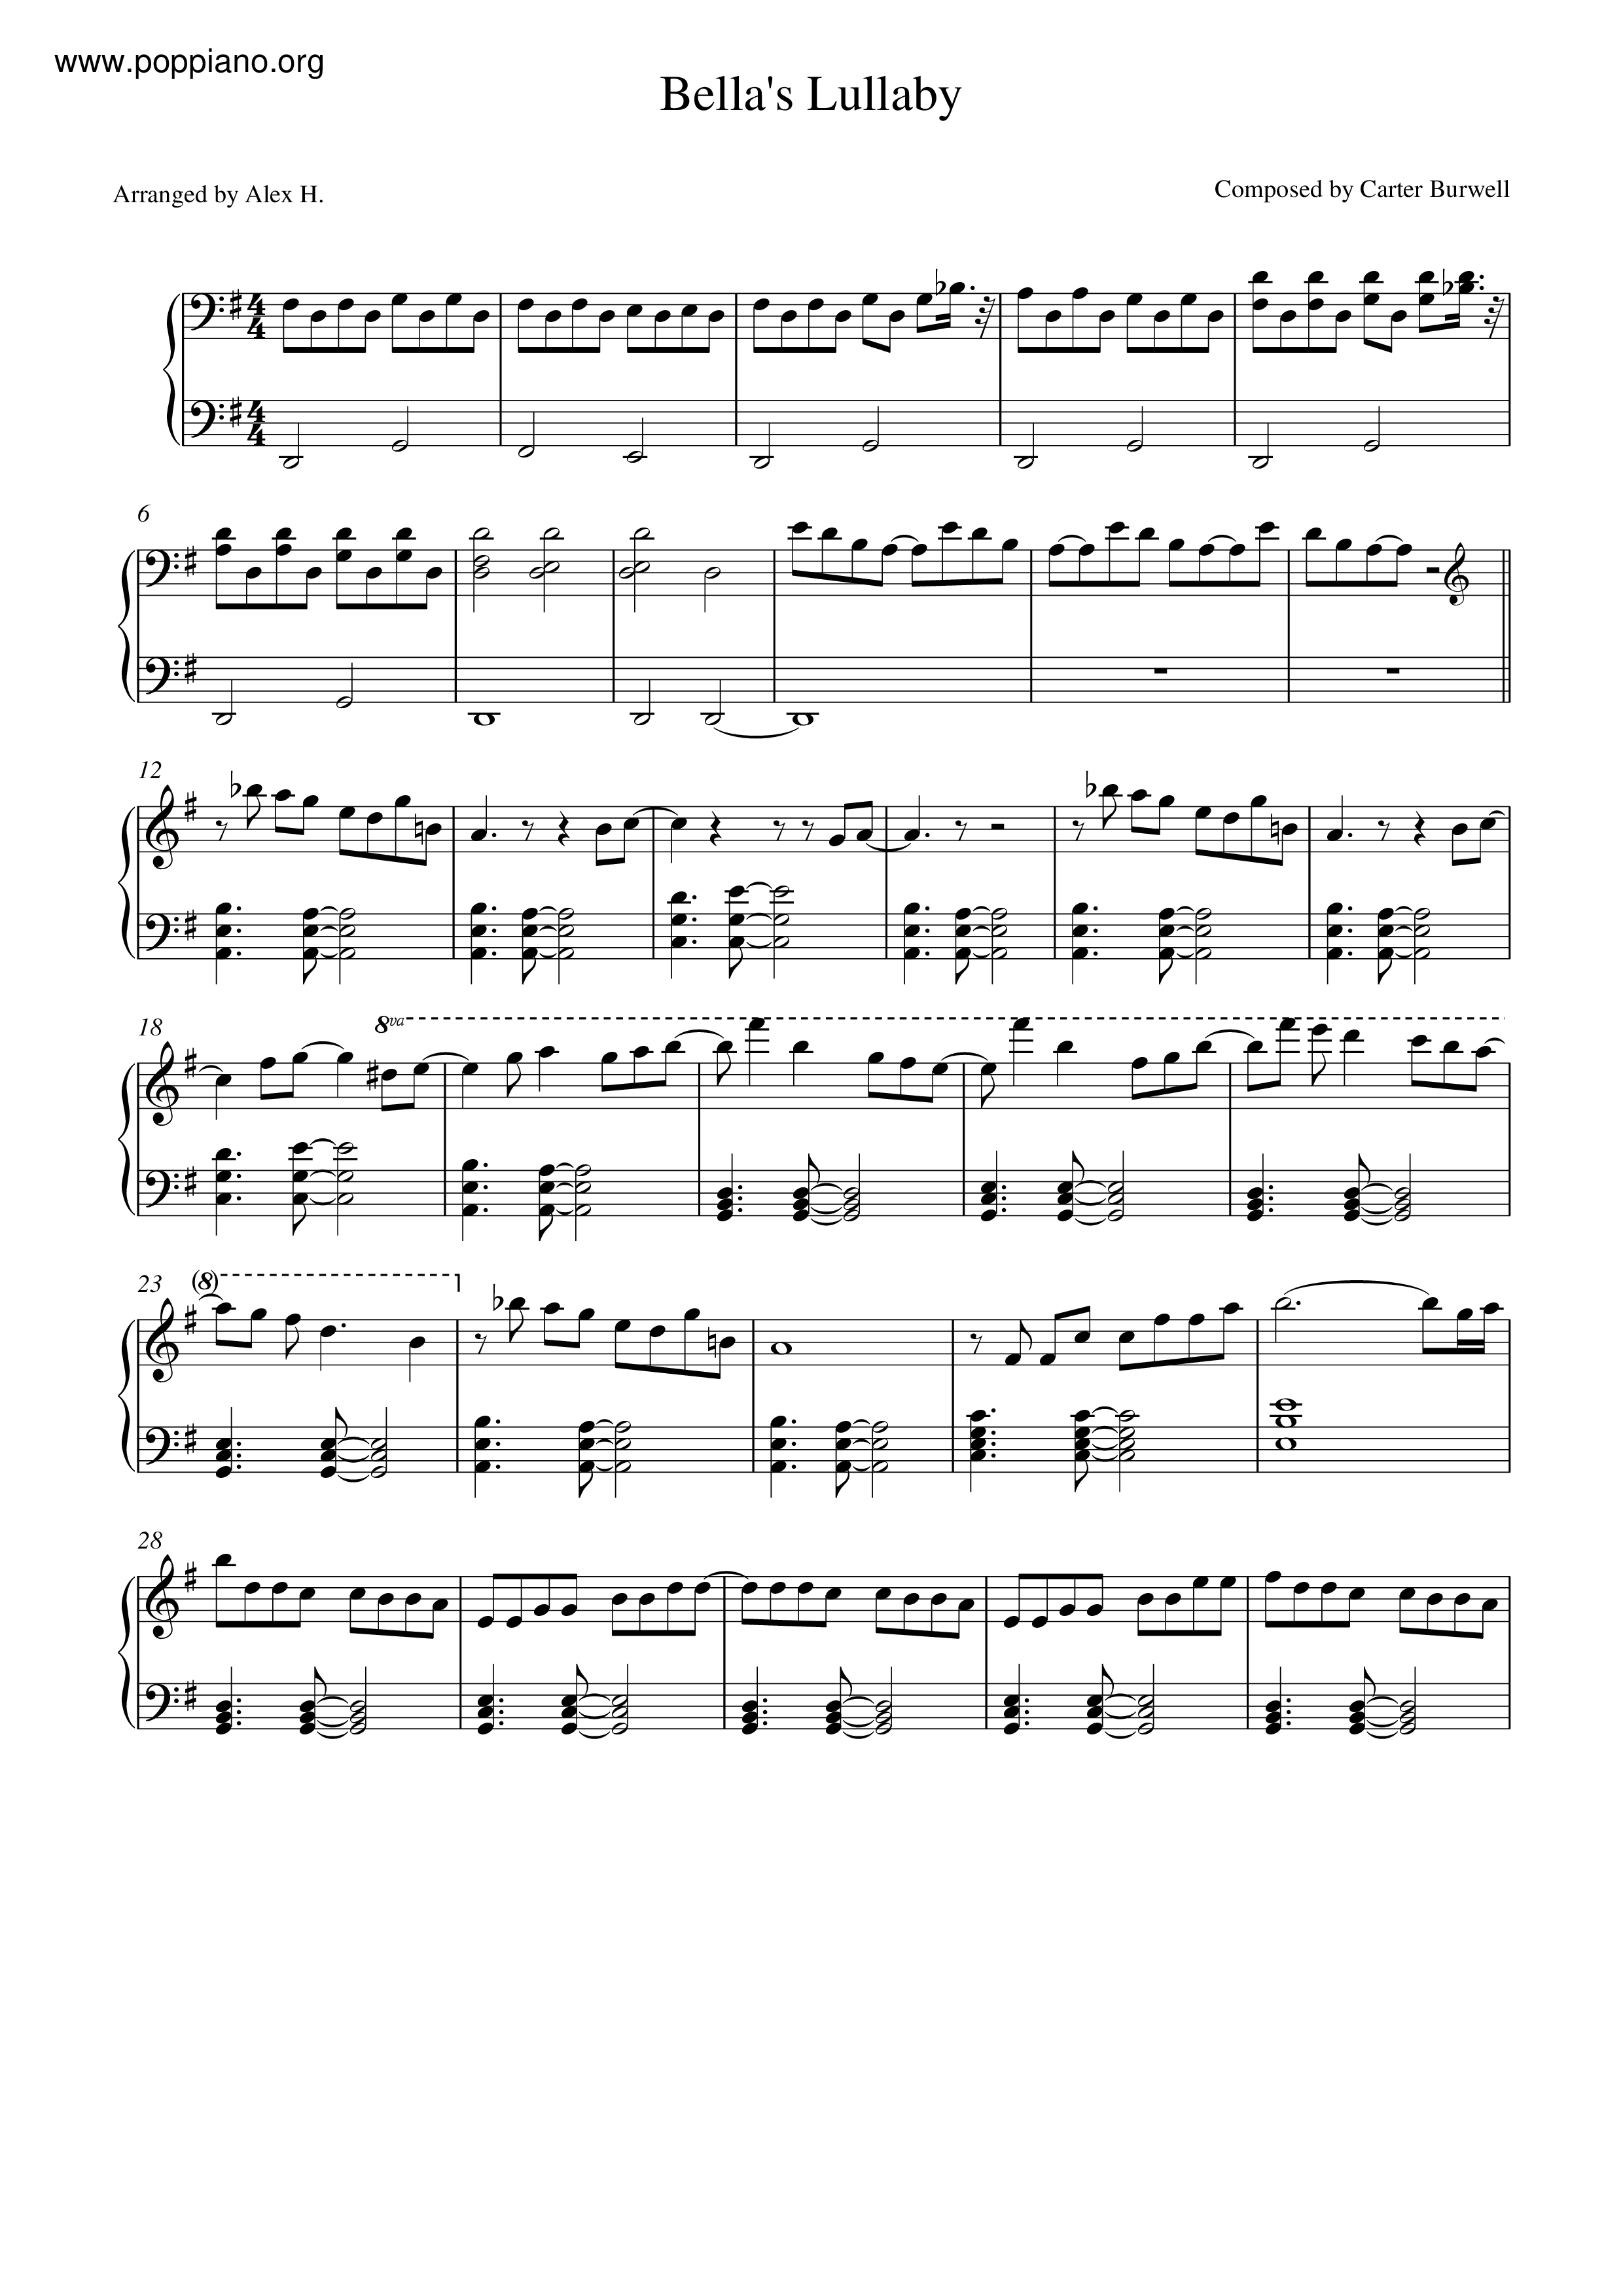 Twilight - Bella's Lullabyピアノ譜